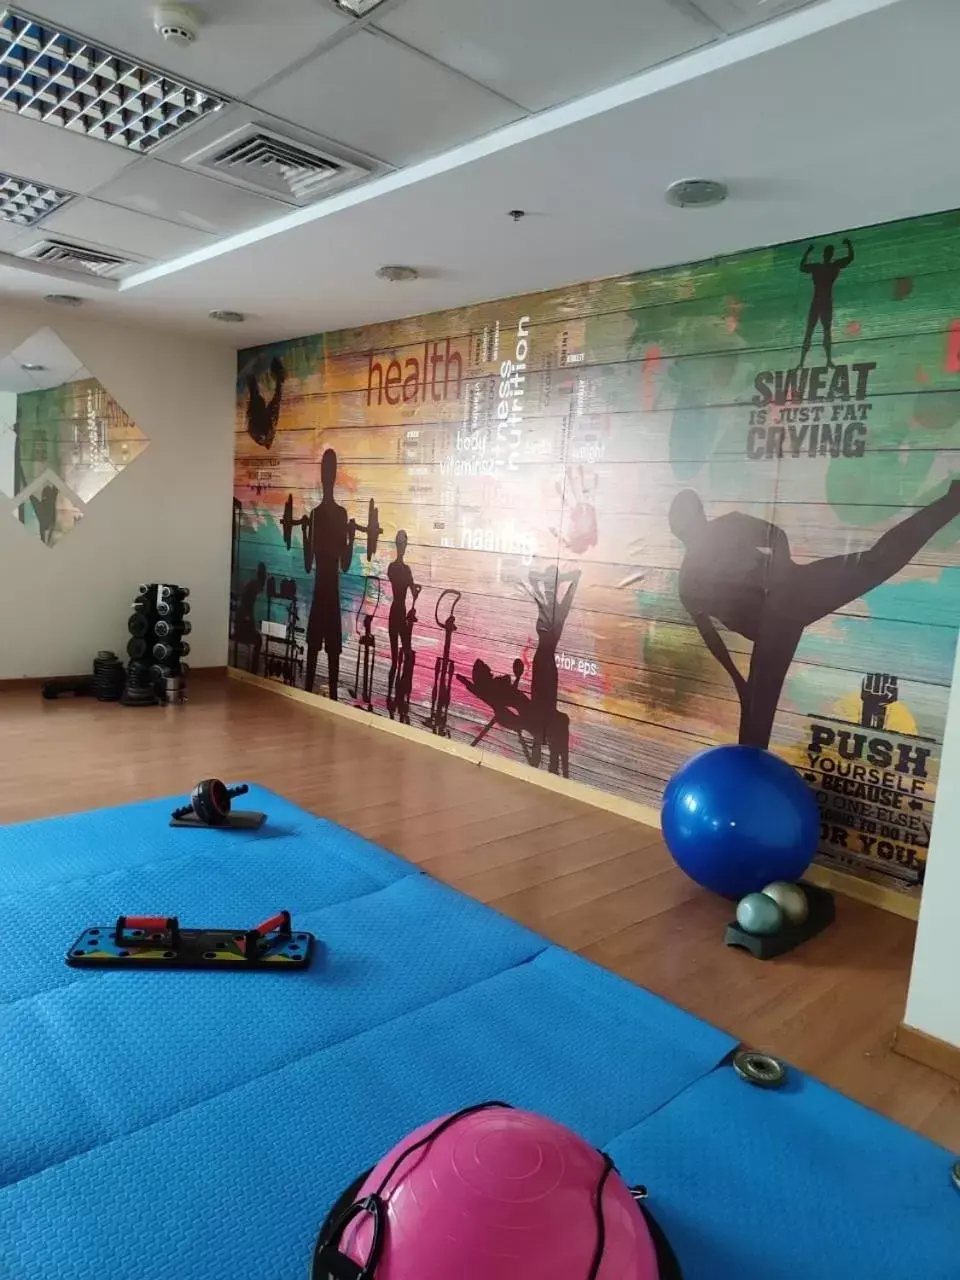 Fitness centre/facilities, Fitness Center/Facilities in Al Raya Hotel Apartments